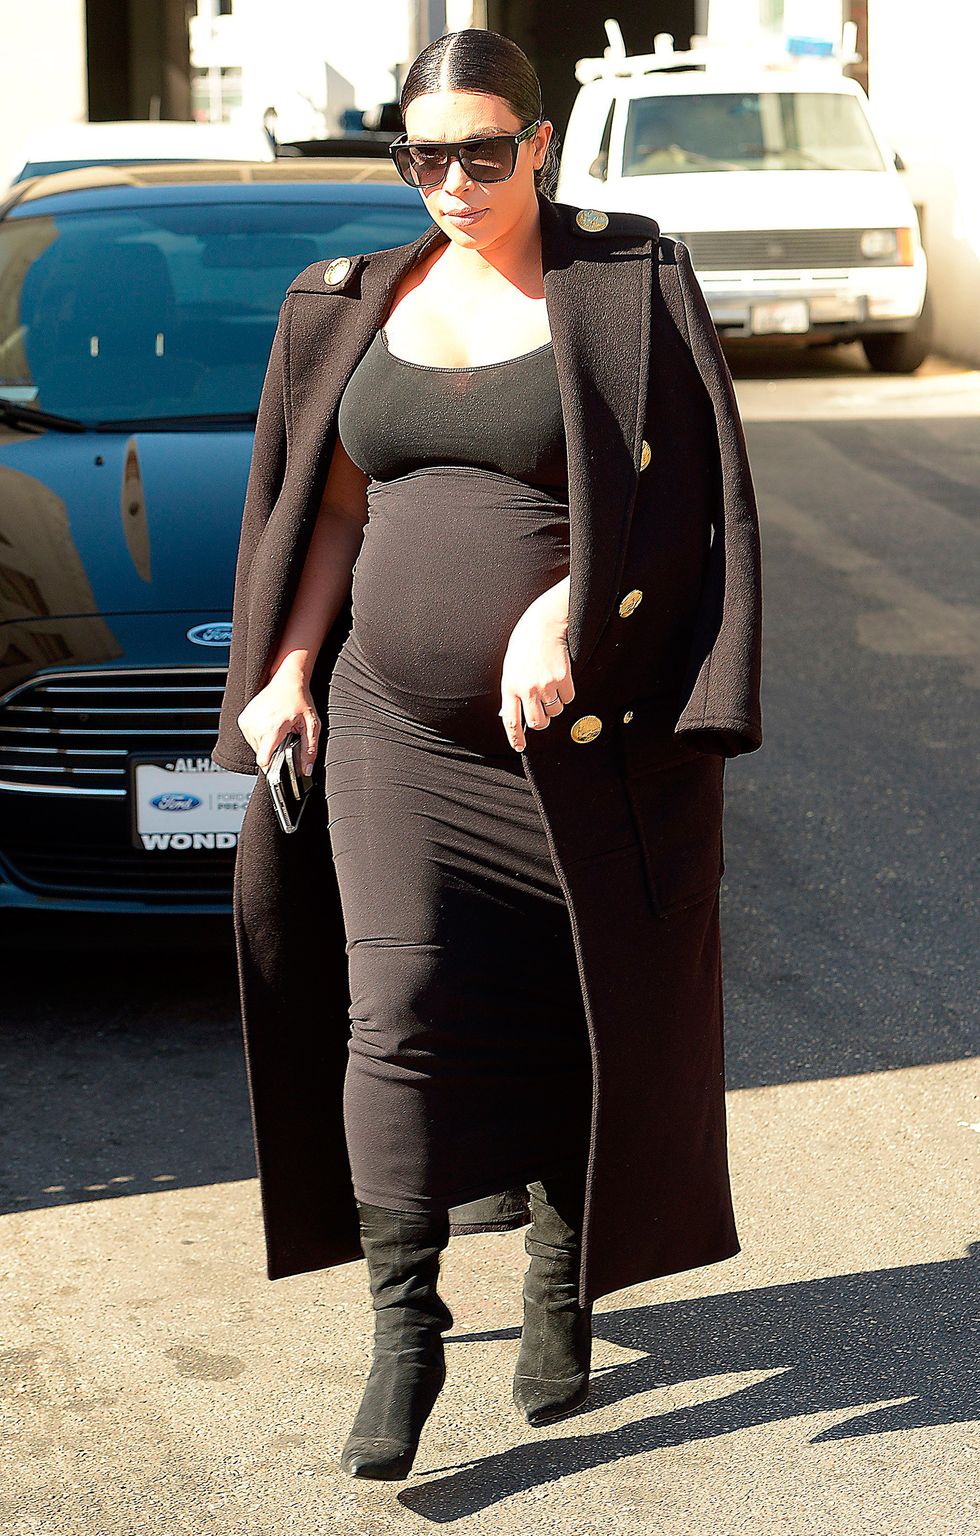 Kim Kardashian wearing all black dress and boots